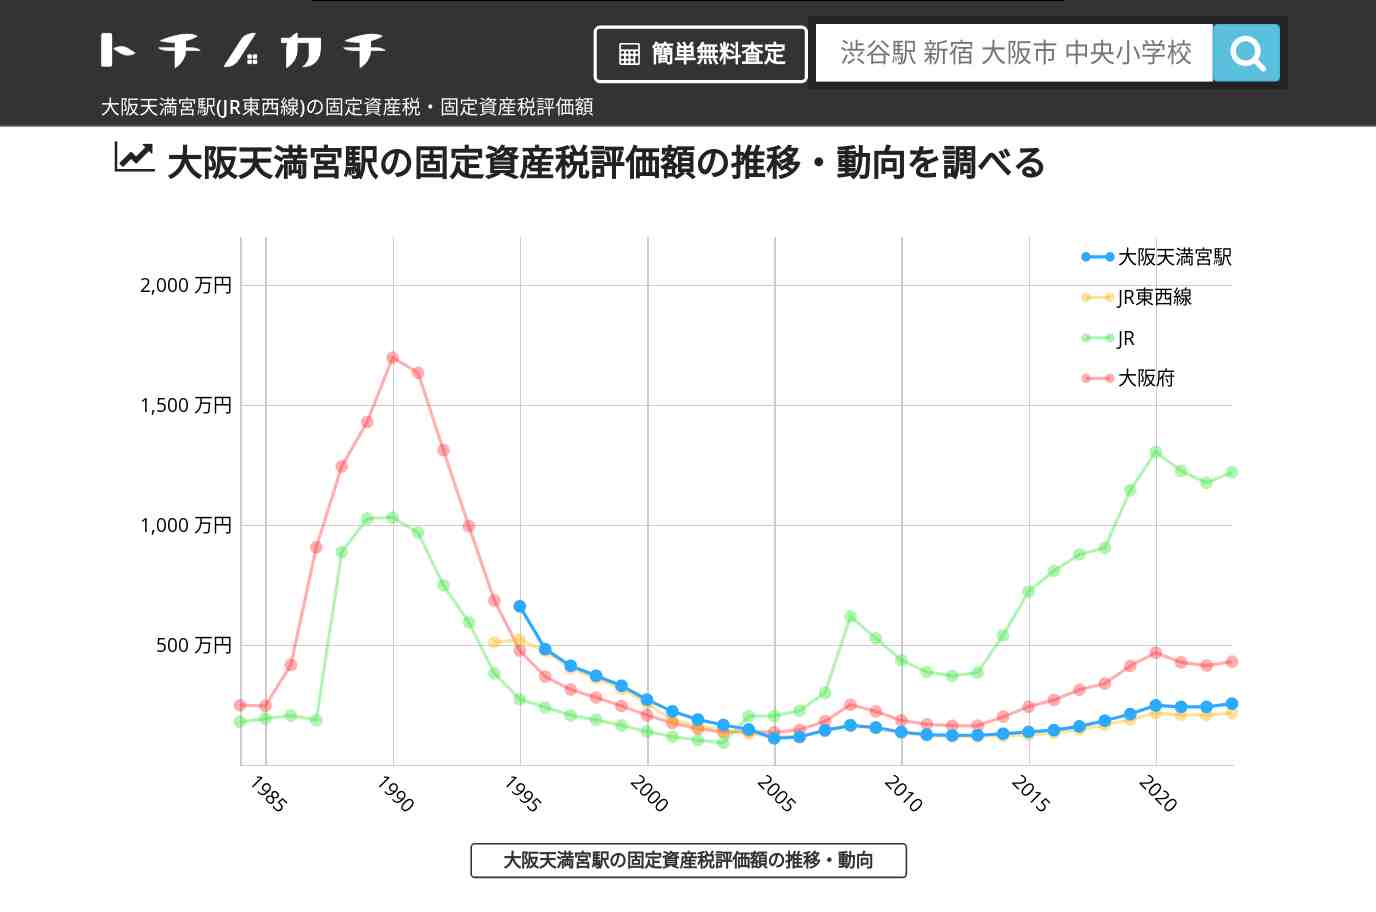 大阪天満宮駅(JR東西線)の固定資産税・固定資産税評価額 | トチノカチ